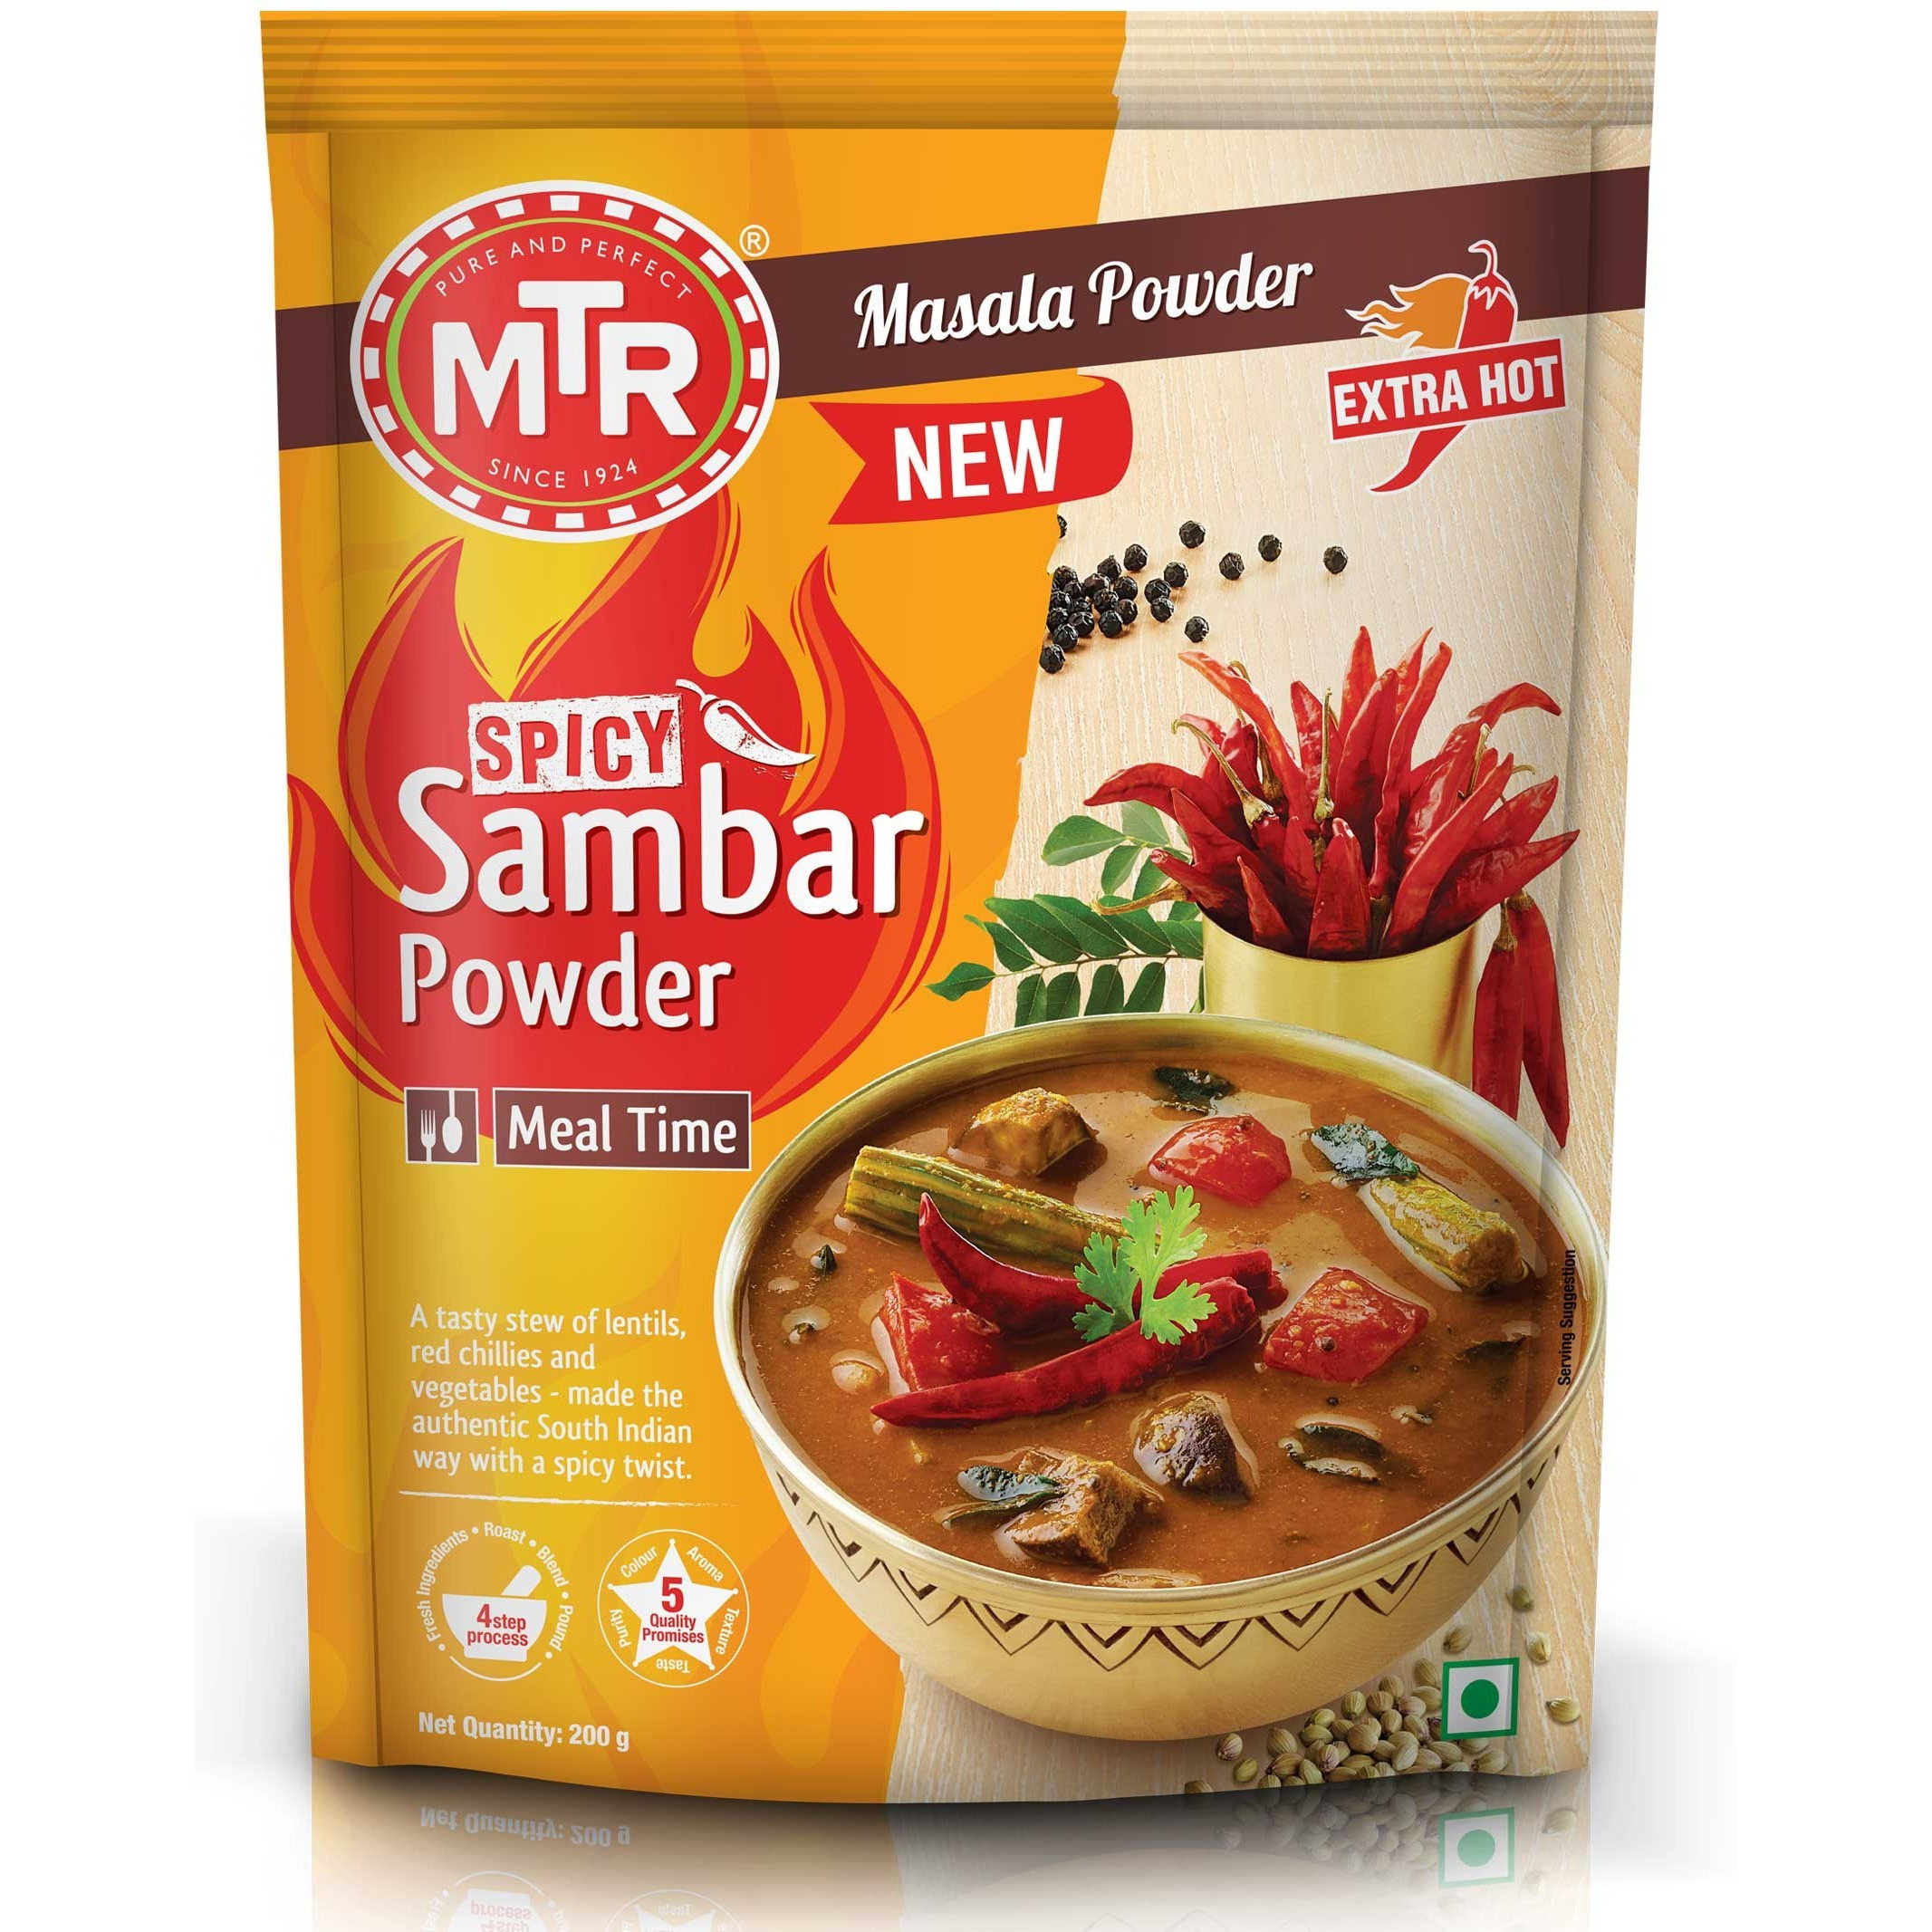 Pack of 4 - Mtr Spicy Sambar Powder Extra Hot - 100 Gm (3.5 Oz)